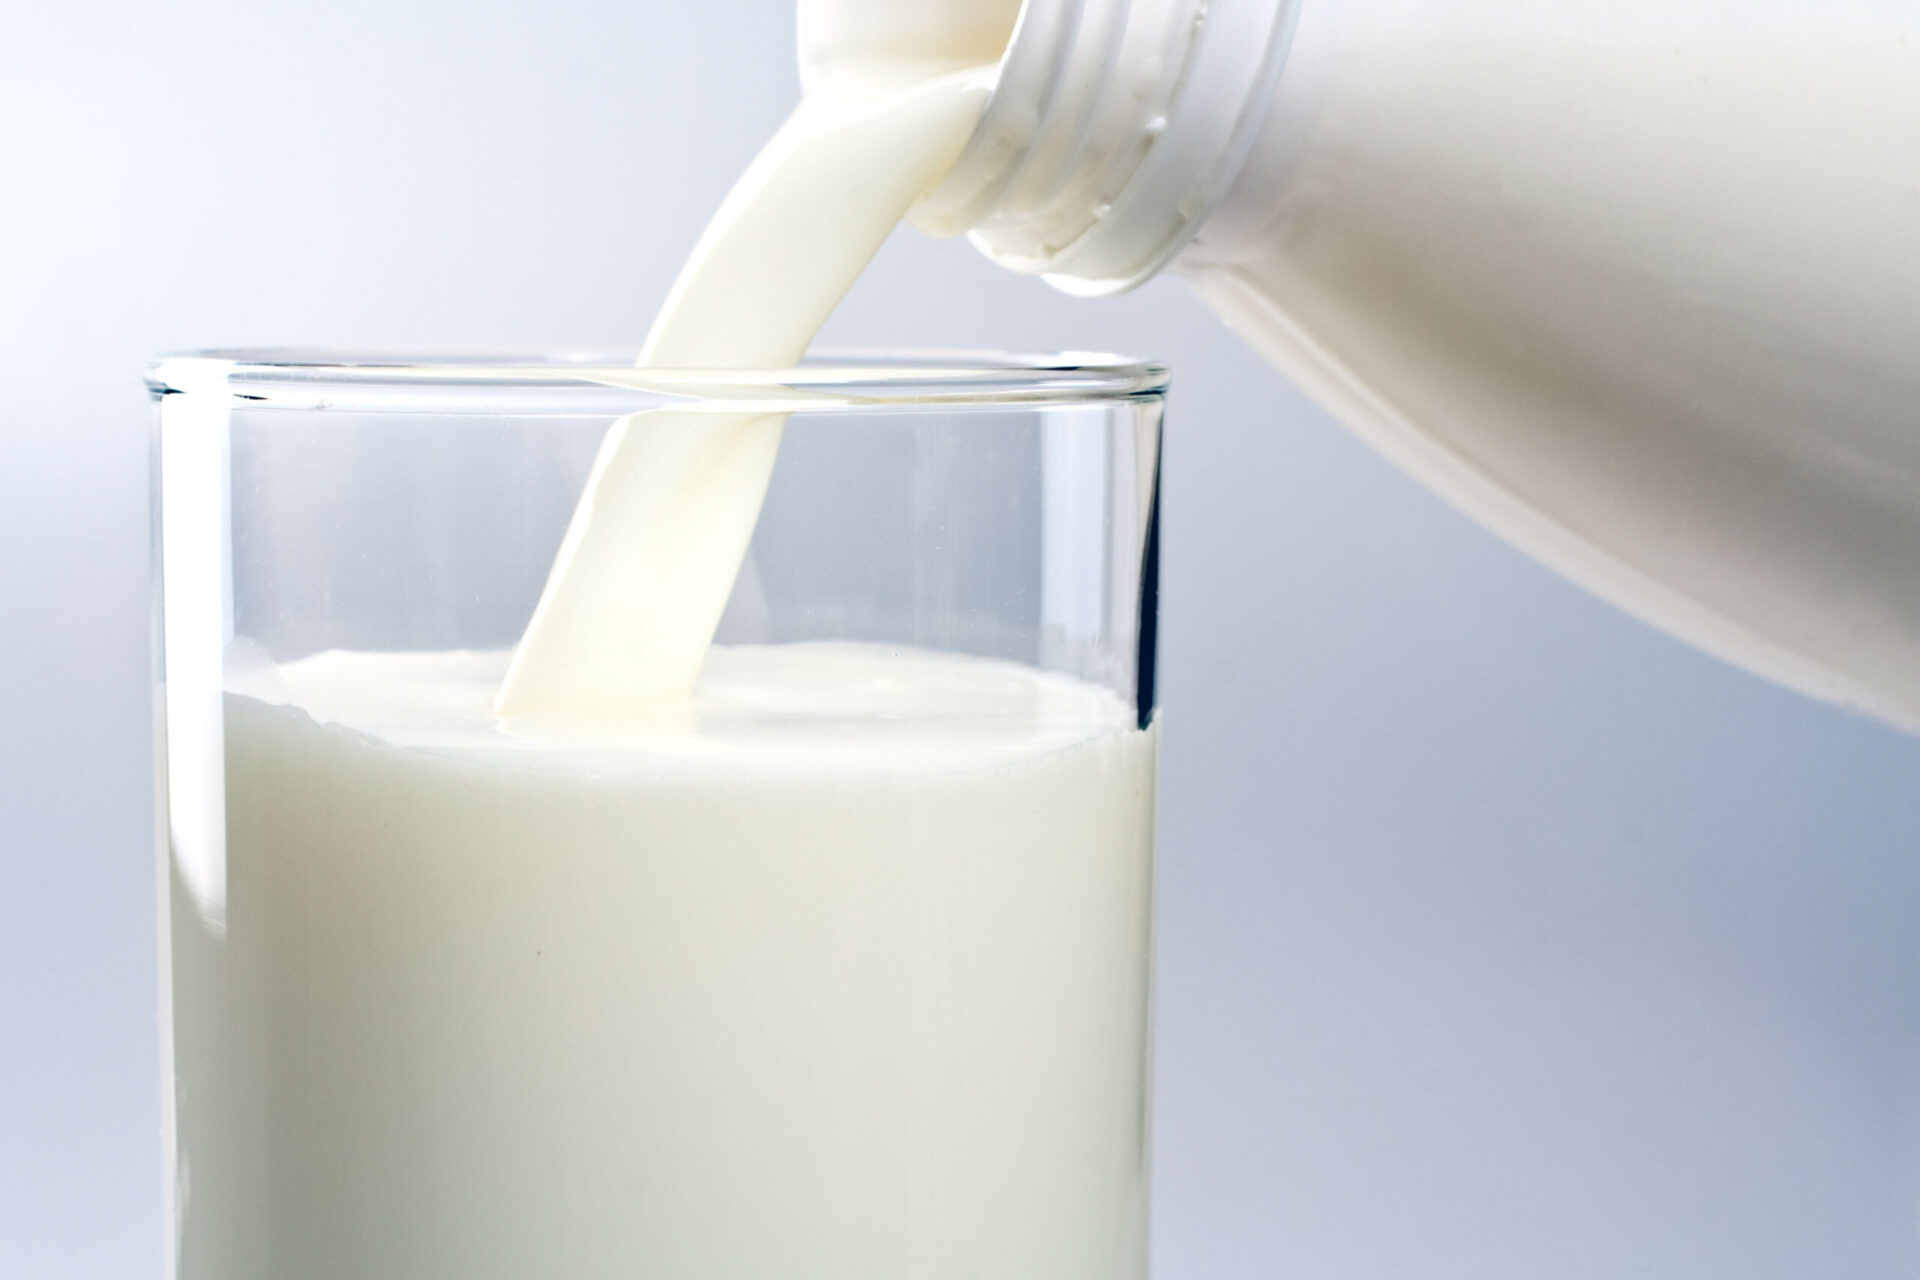 Skimmed Milk Market Trends, Growth, Revenue, Future Development & Forecast